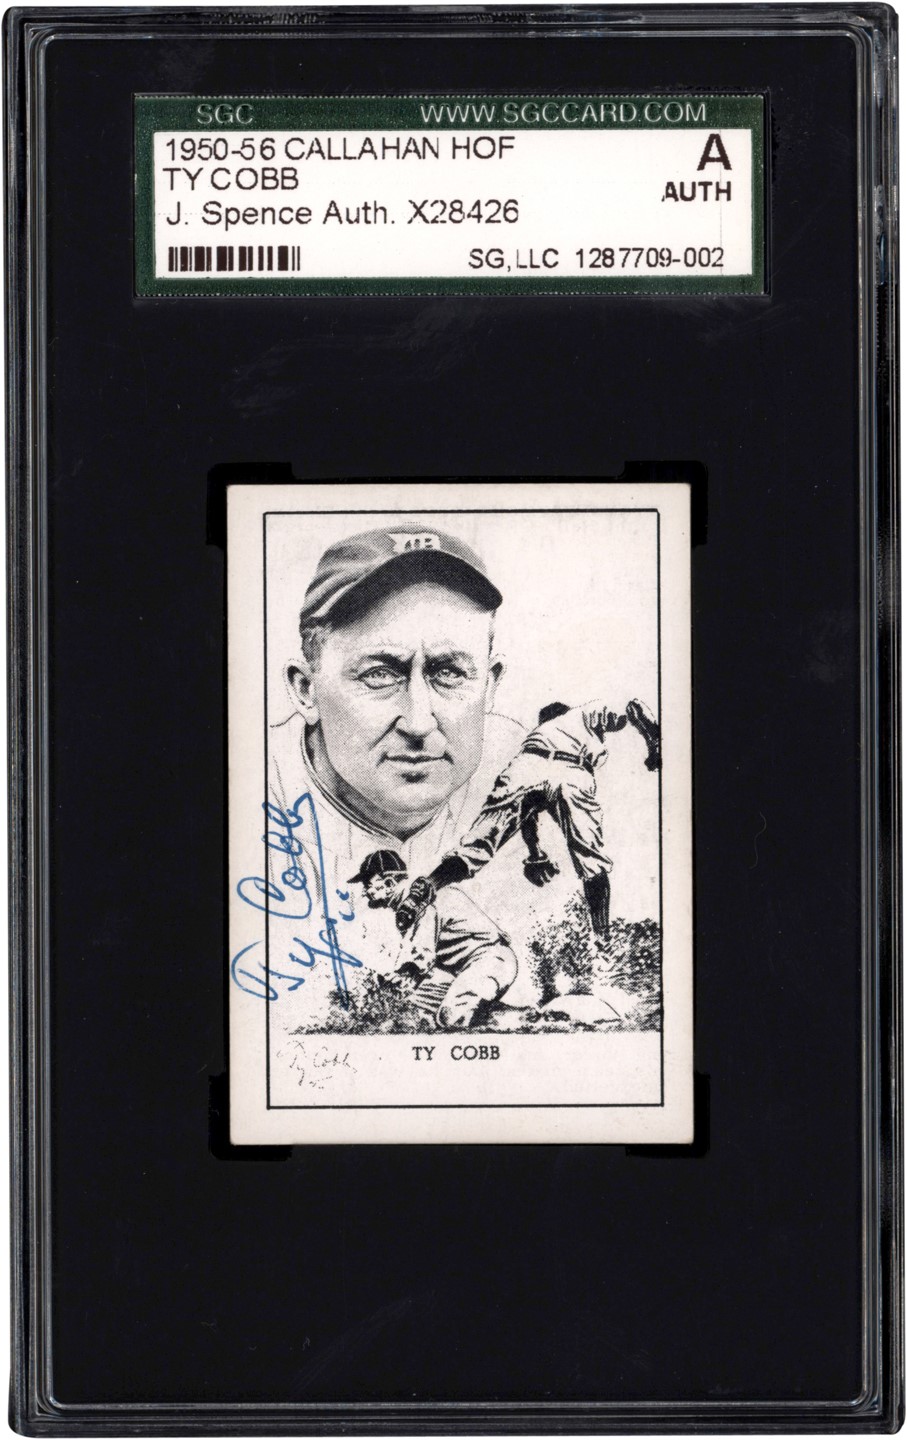 1950-56 Callahan Hall of Fame Ty Cobb Signed (SGC & JSA)